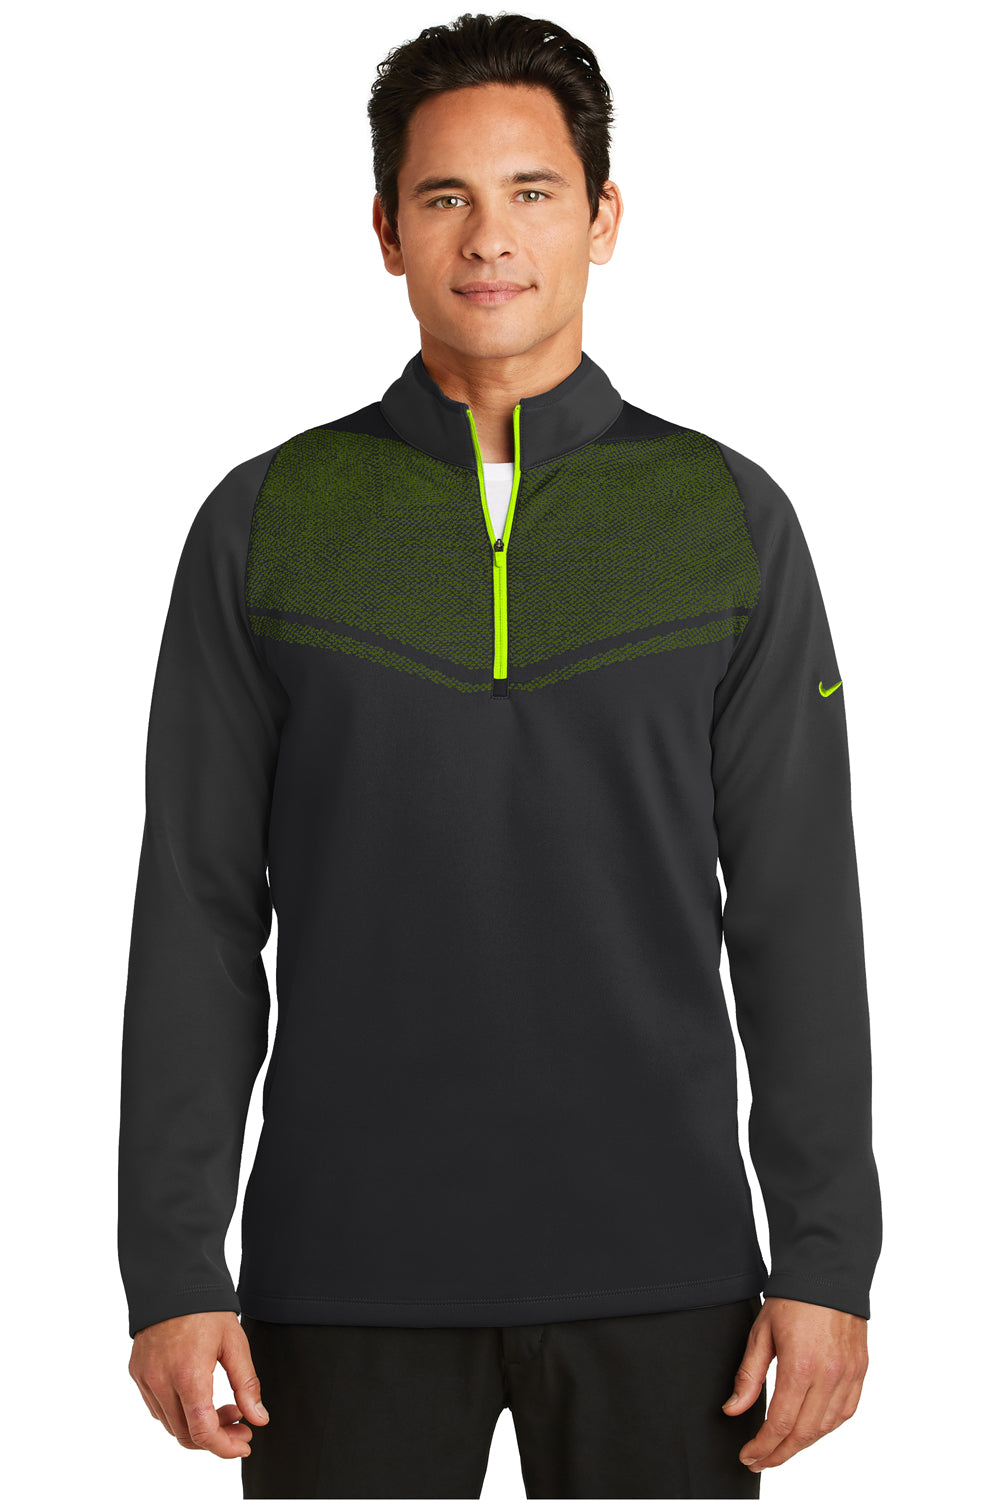 Nike 779803 Mens Hypervis Therma-Fit Moisture Wicking 1/4 Zip Sweatshirt Black/Volt Green Front